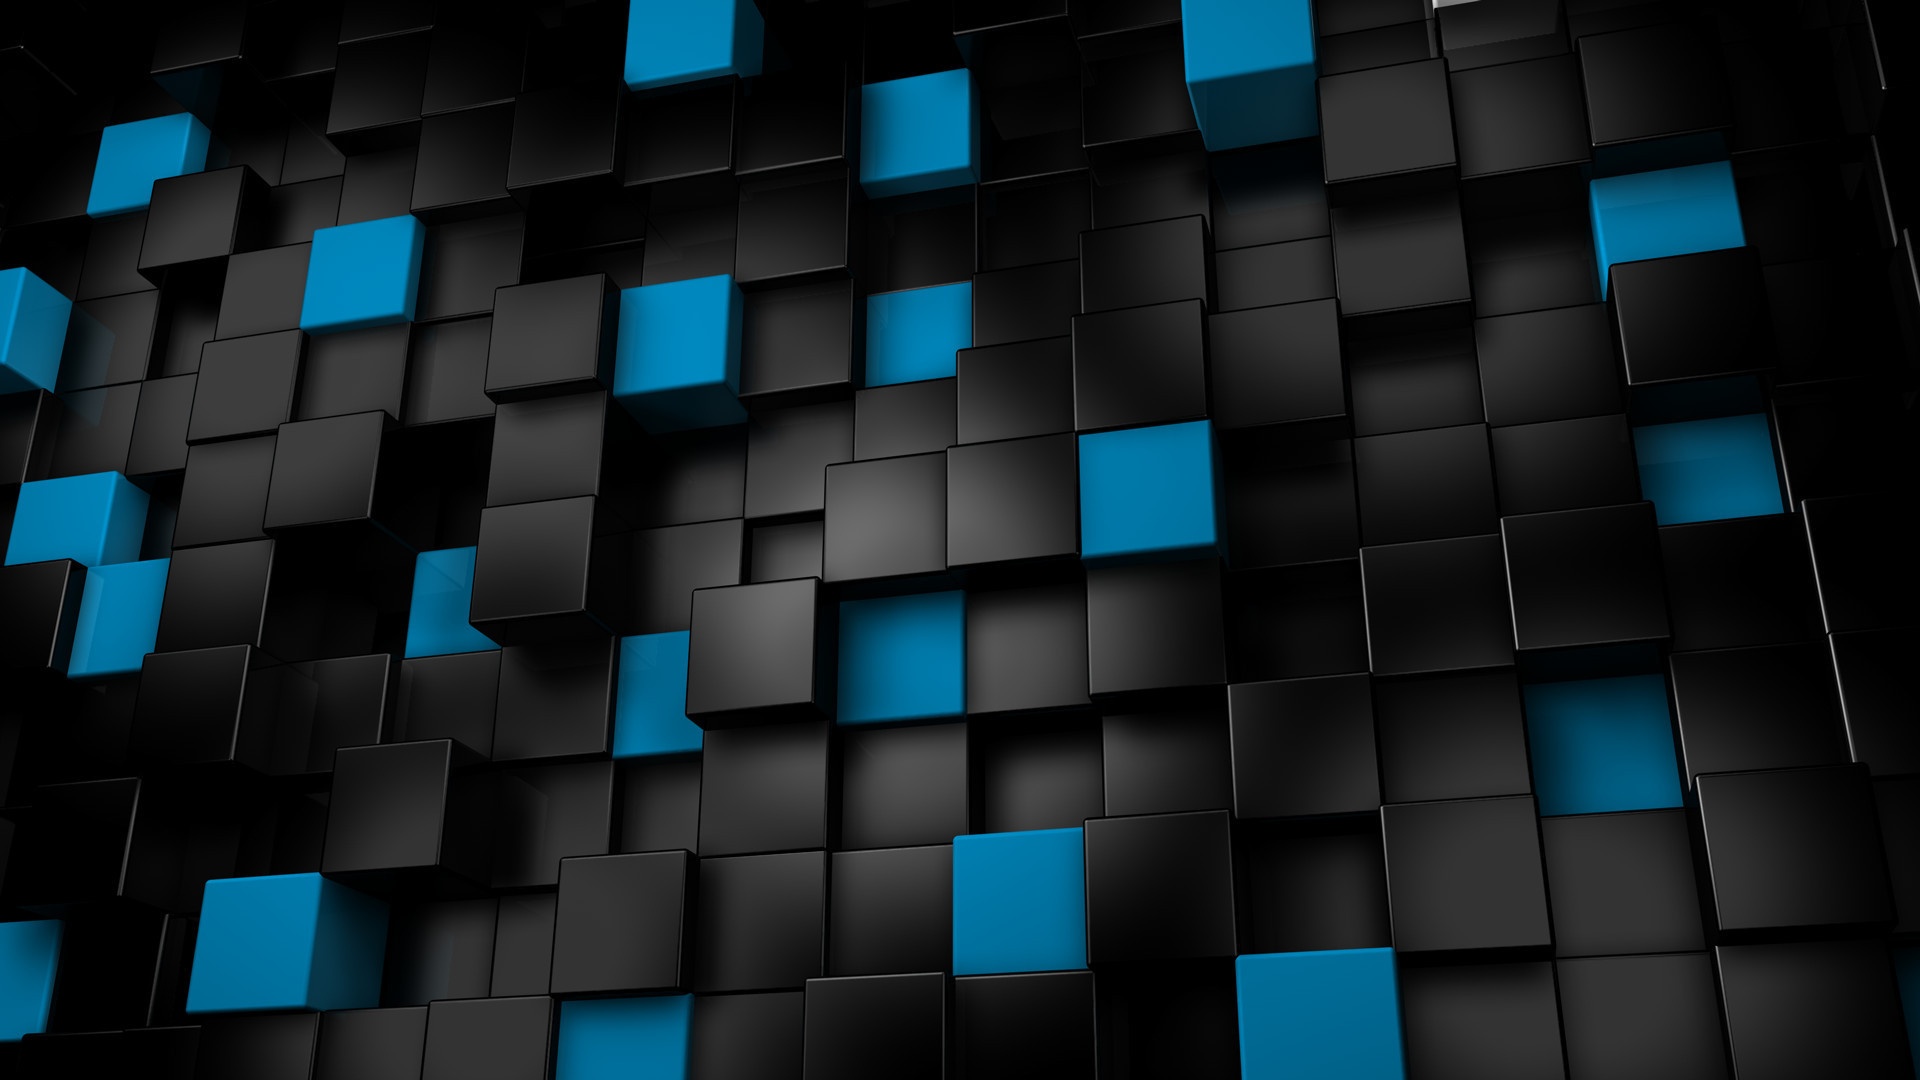 3d black cubes backgrounds wallpapers1 wallpapers55com   Best 1920x1080